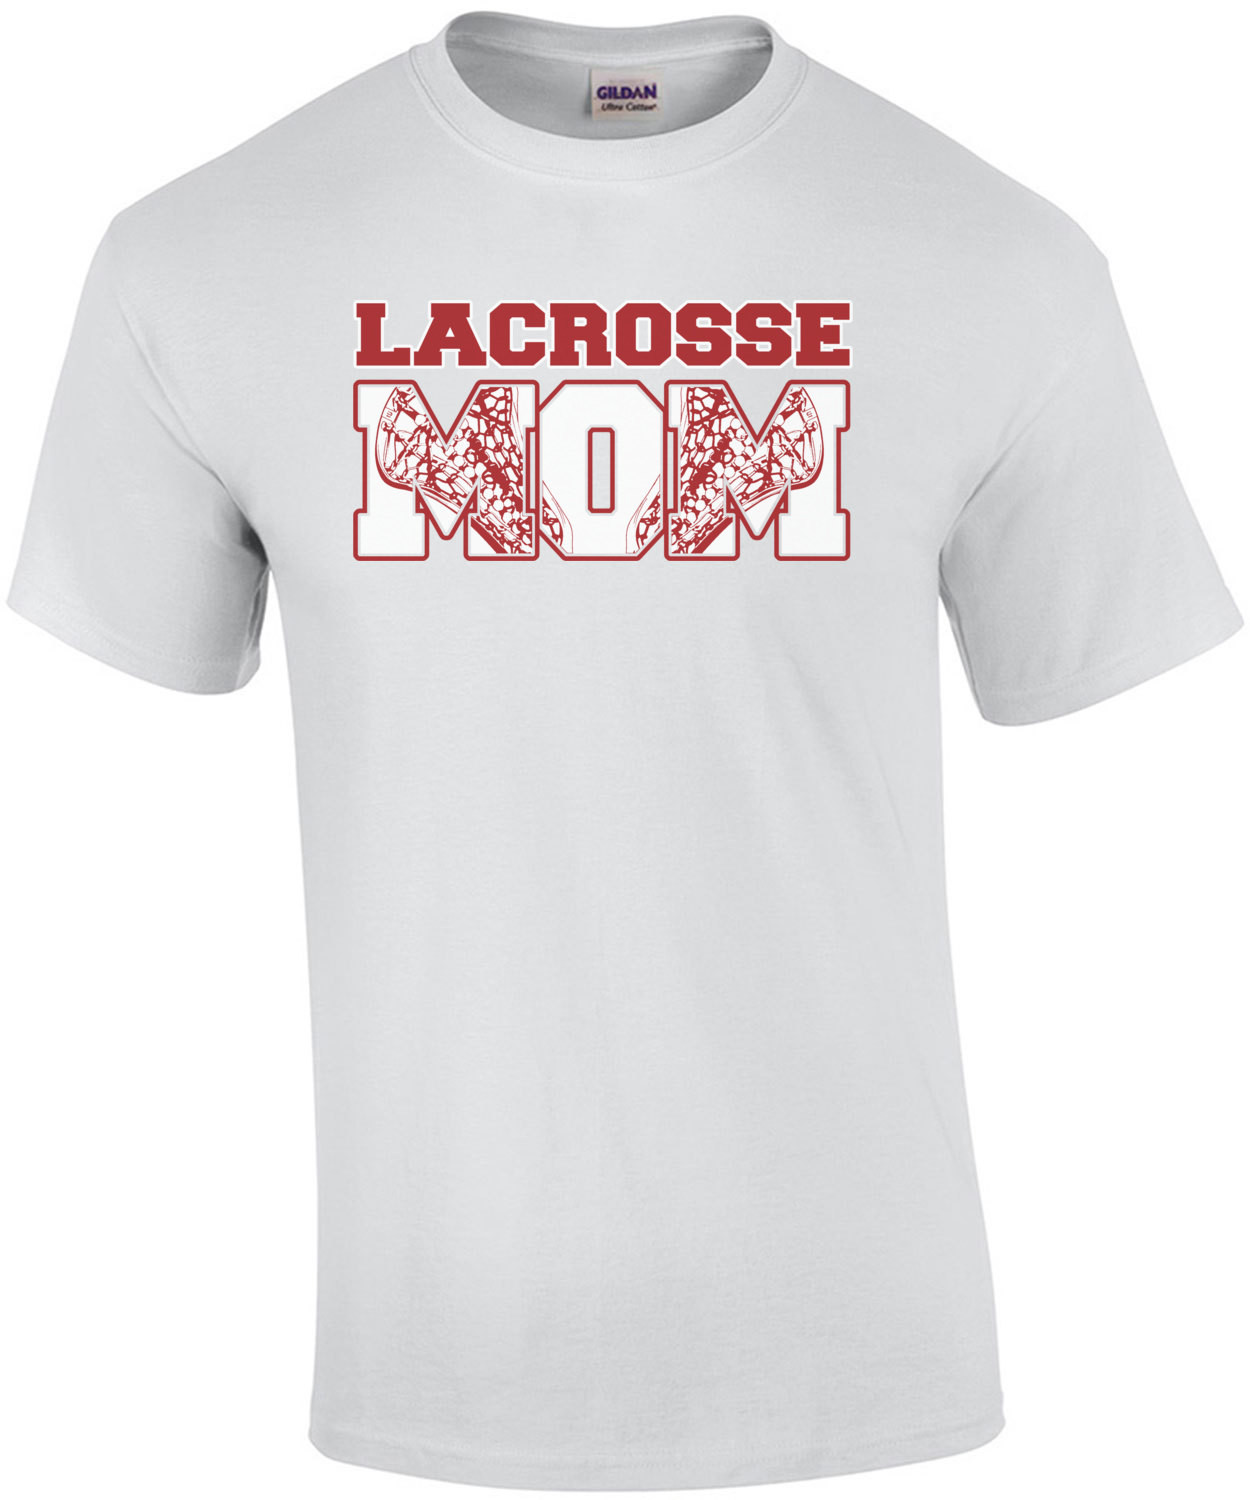 Lacrosse Mom T-Shirt